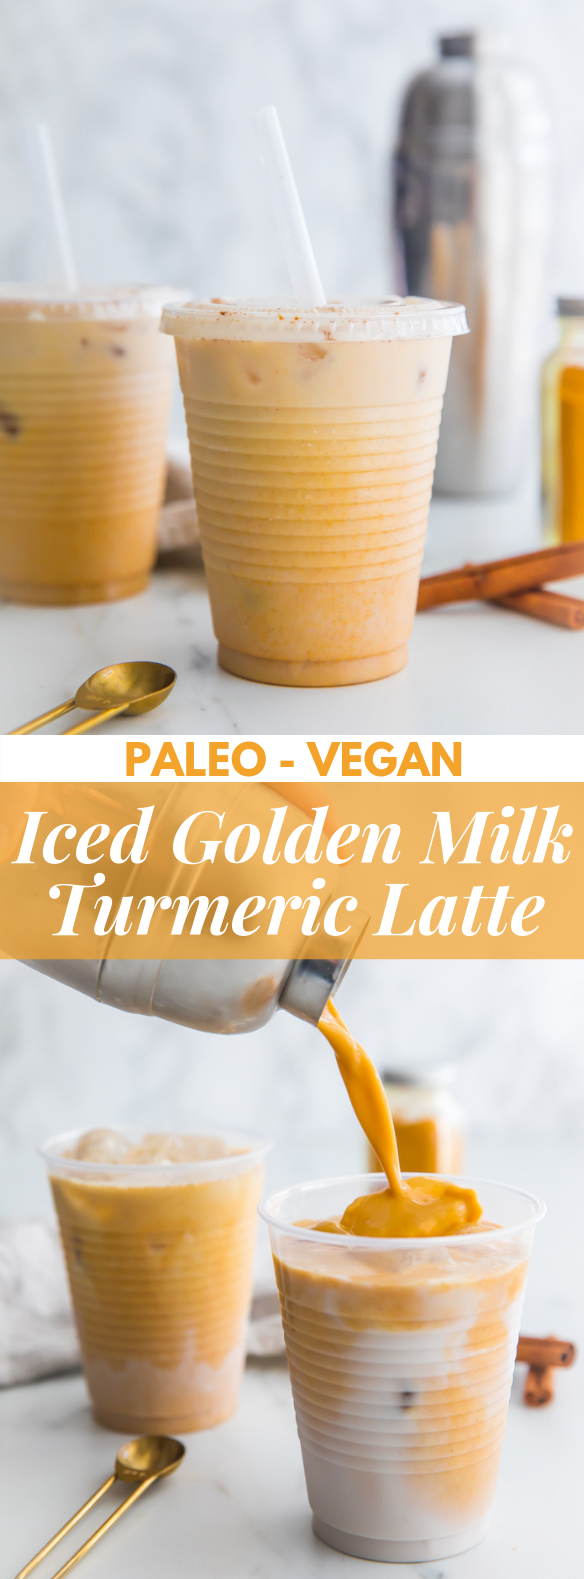 Iced Golden Milk Turmeric Latte (Paleo, Vegan, Anti-Inflammatory)